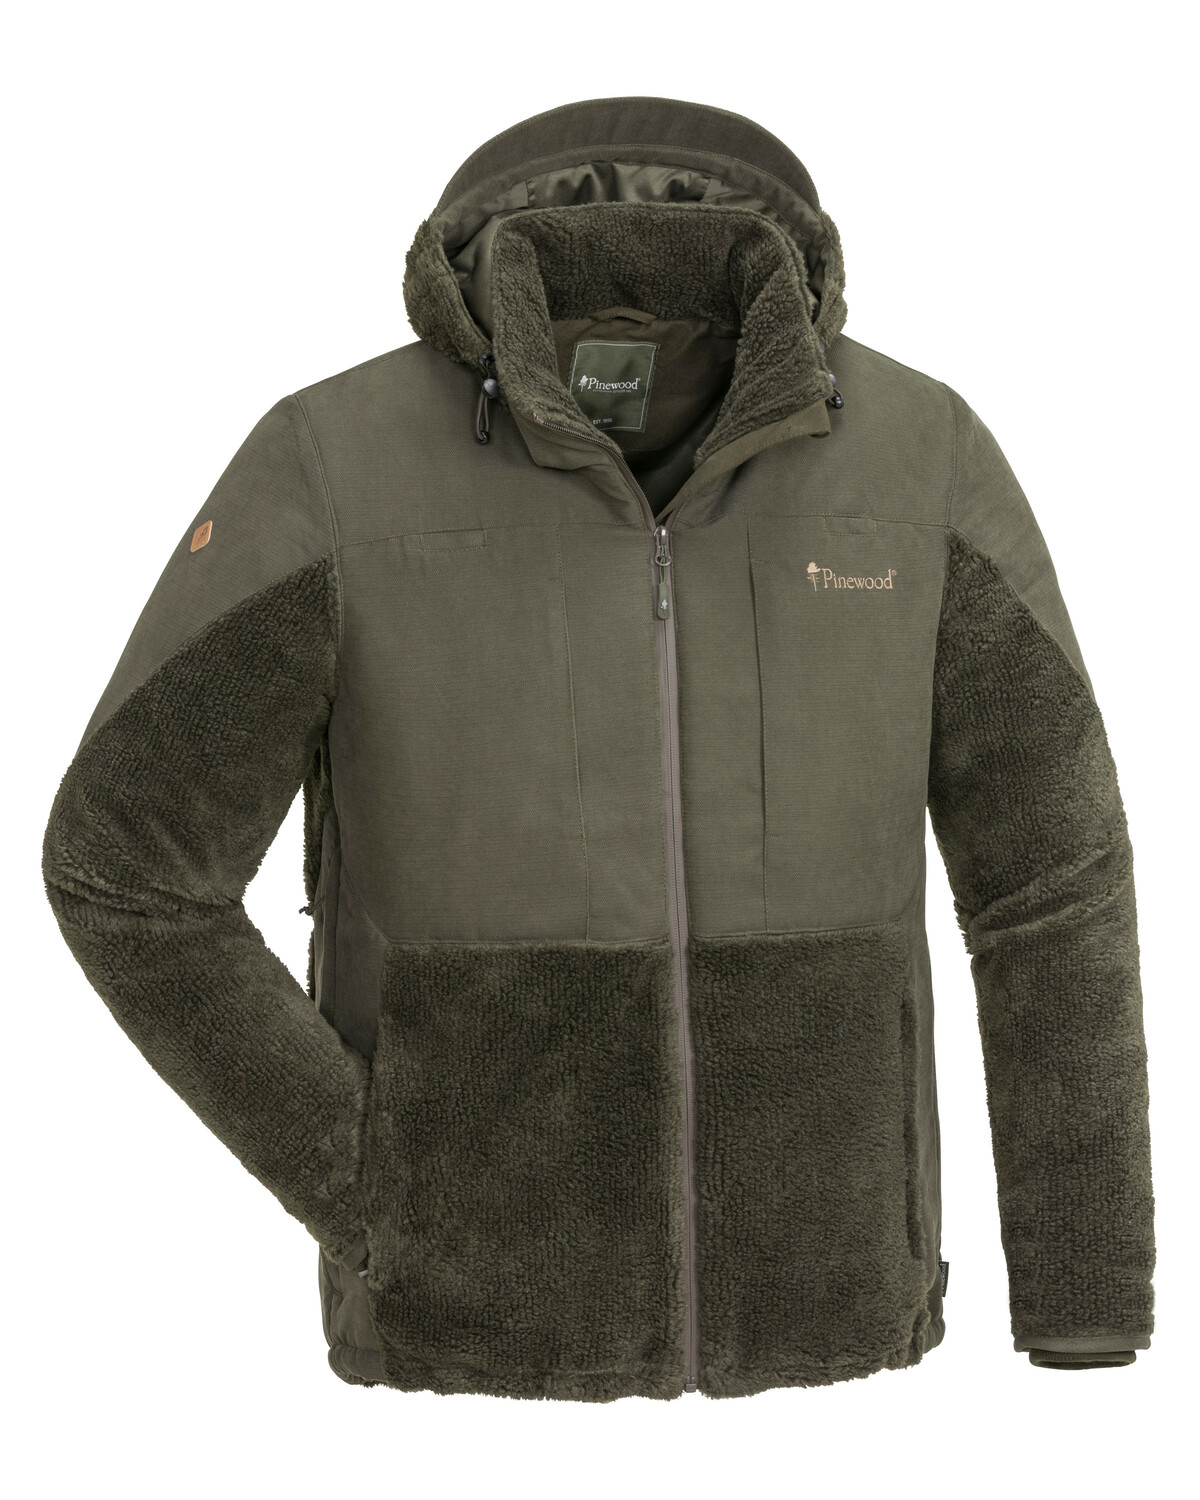 Зимняя охотничья куртка ESBO PILE  Pinewood 5903-241